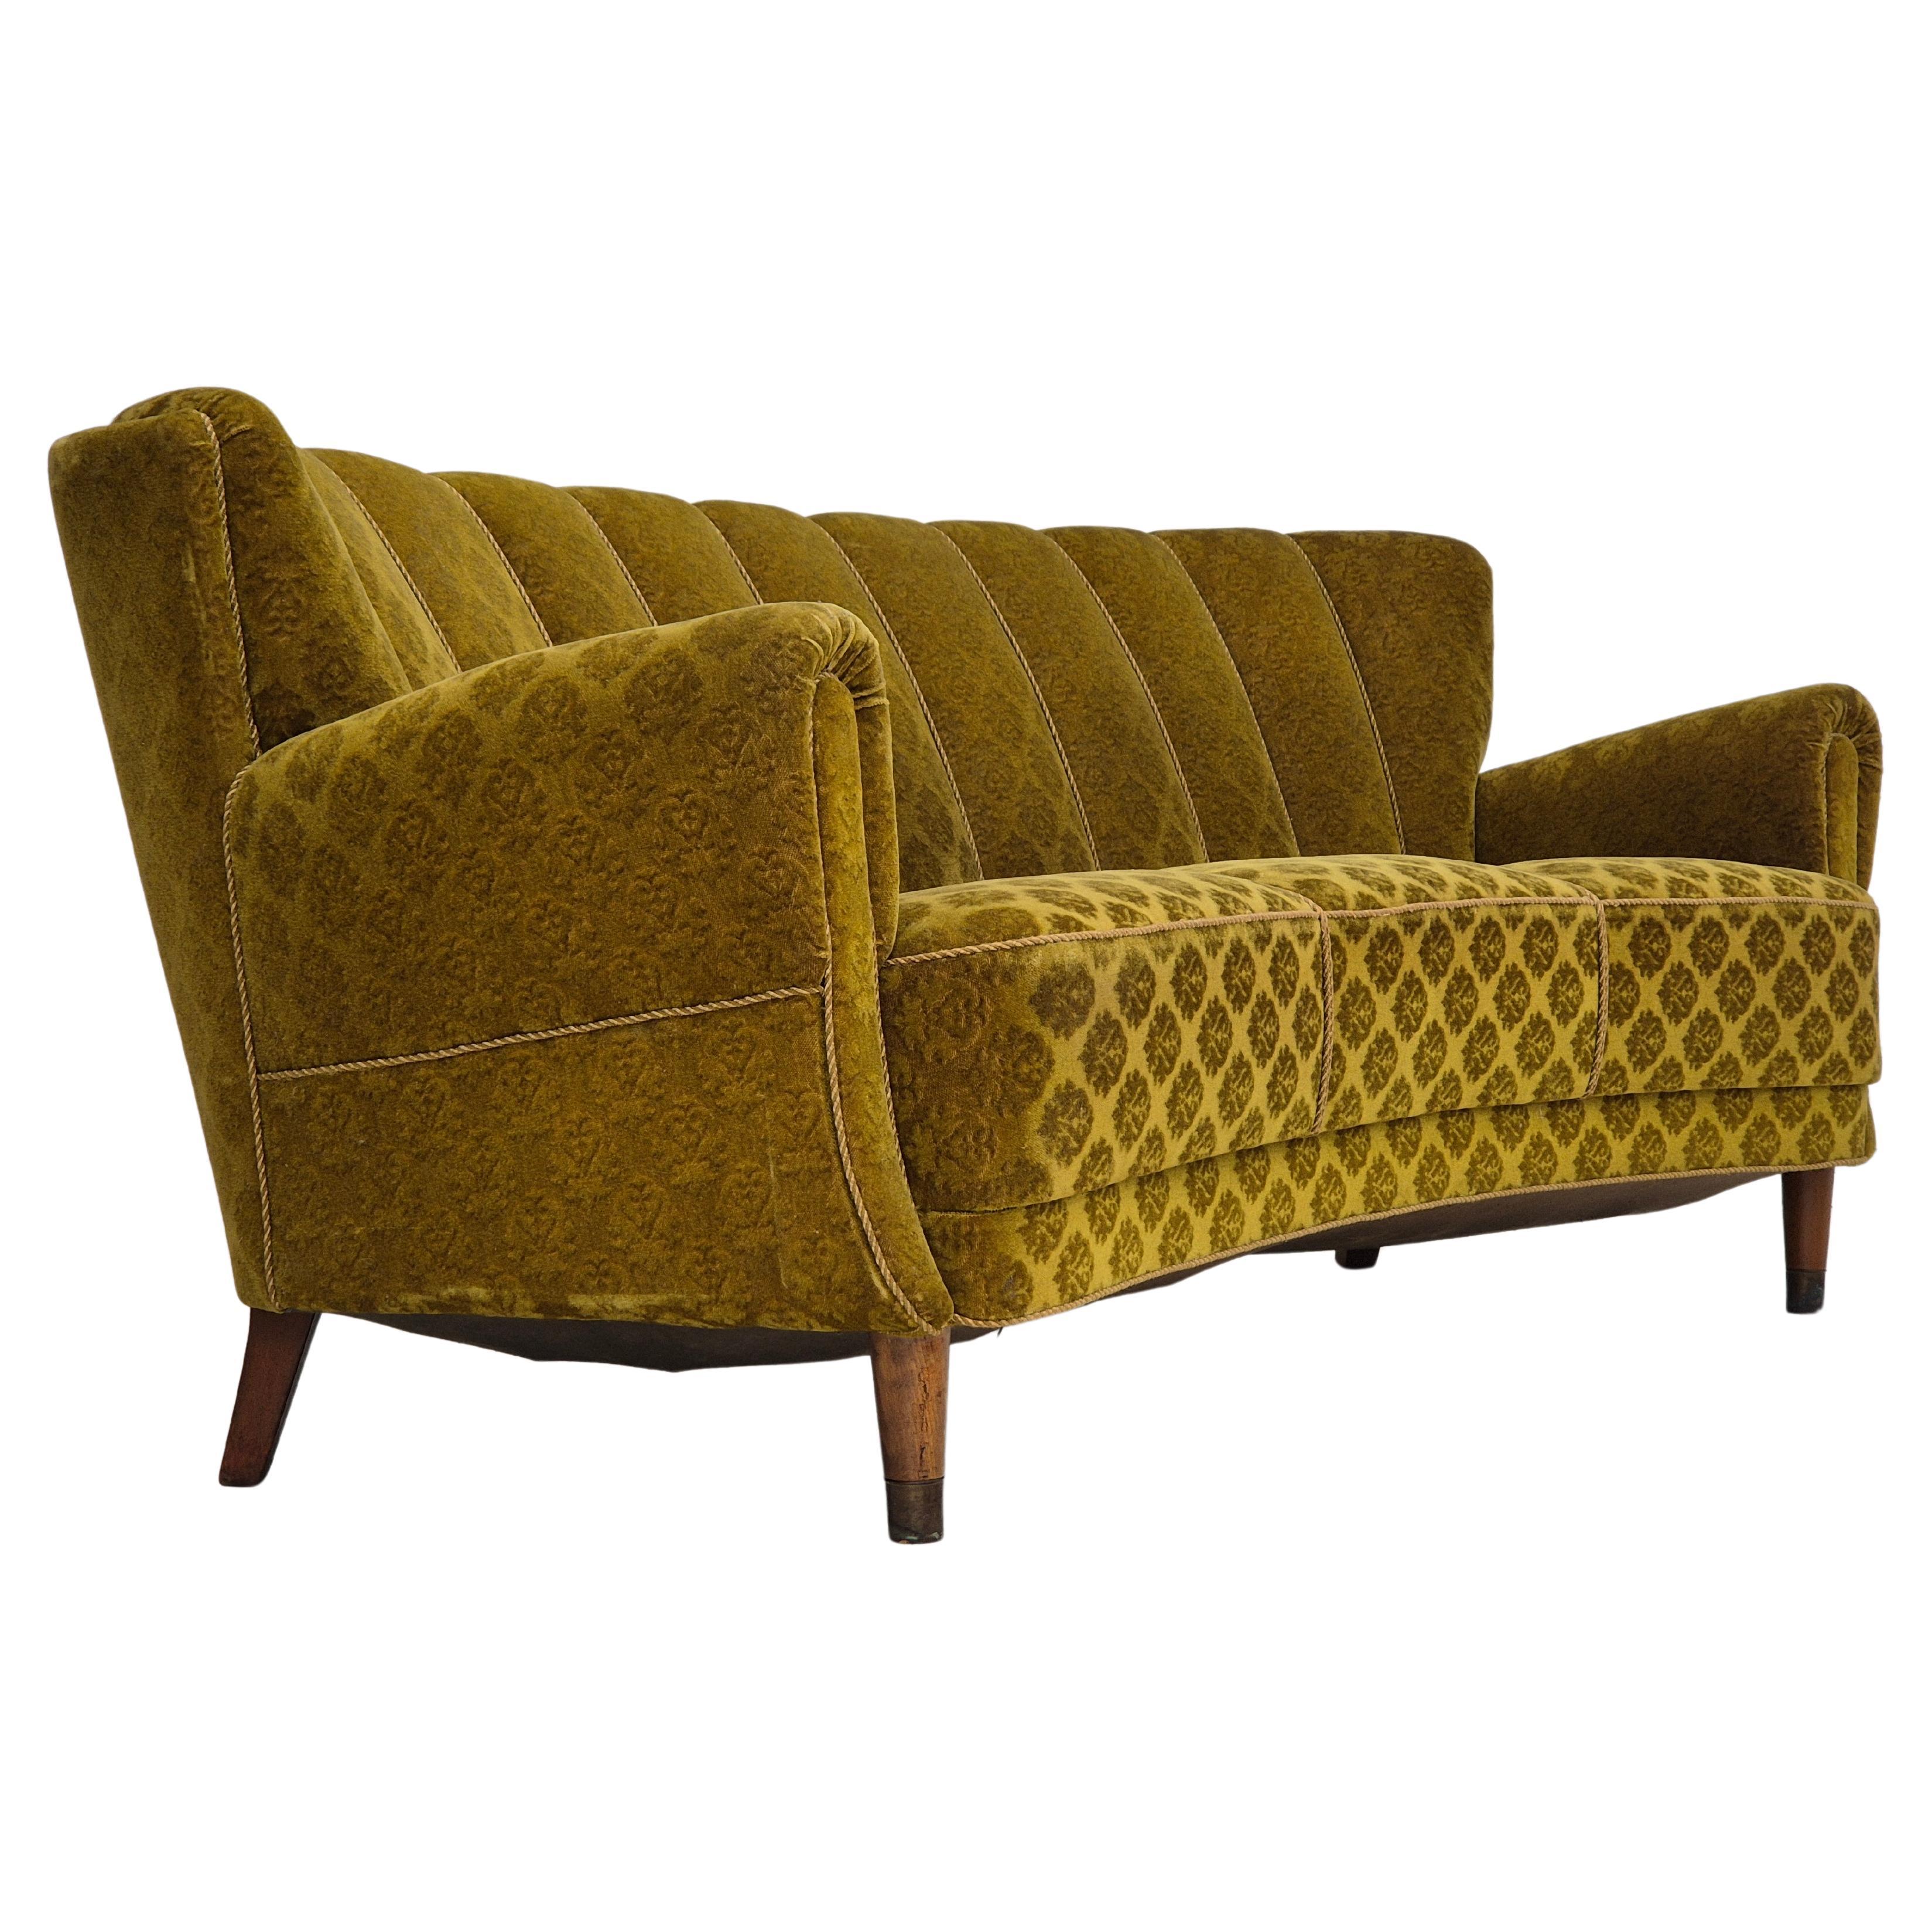 1960s, Danish 3 seater curved sofa, original condition, furniture velour, beech.